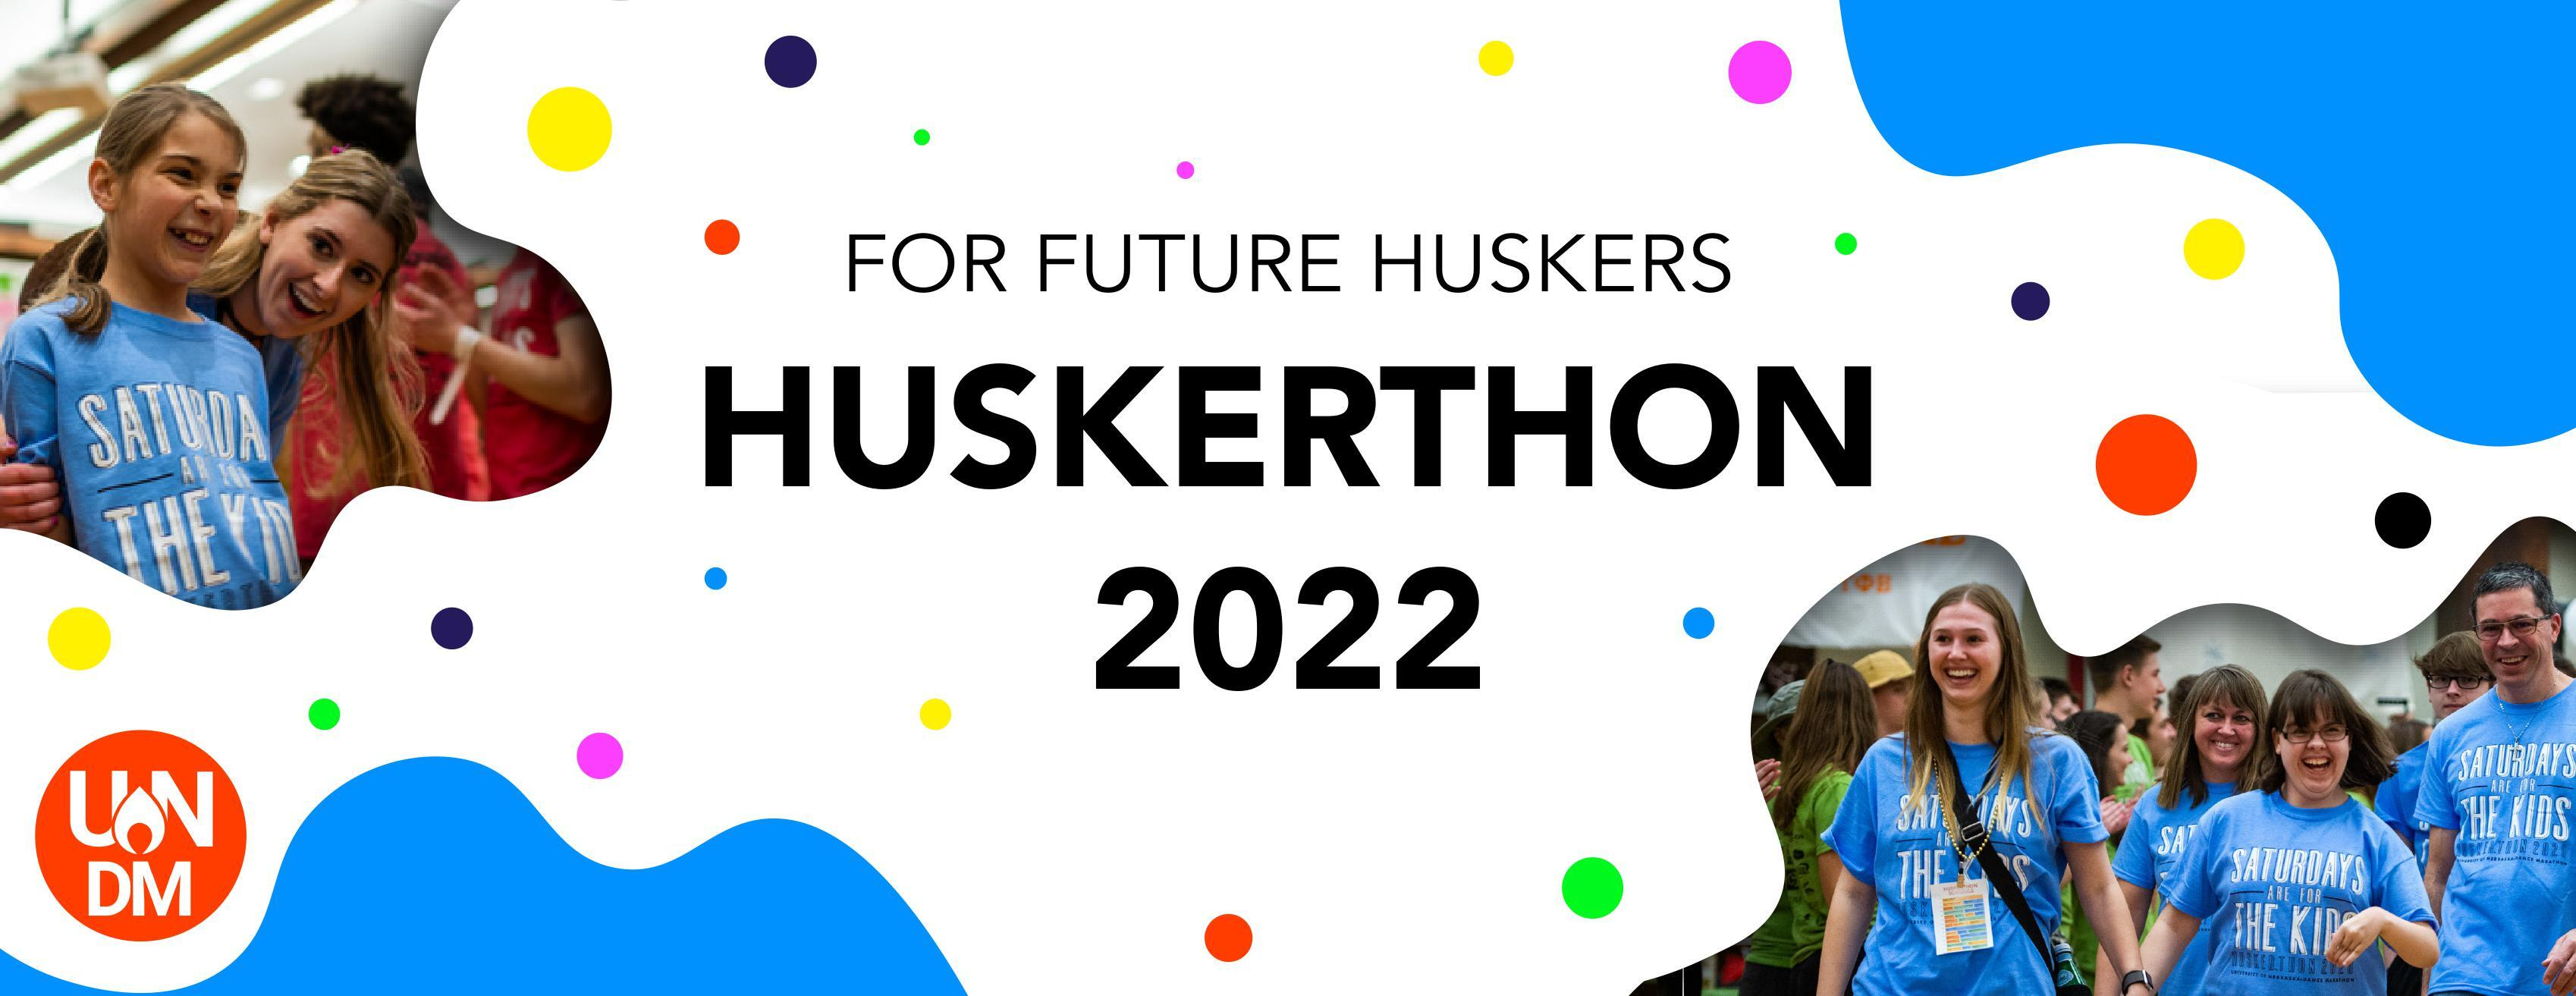 For Future Huskers, HuskerThon 2022